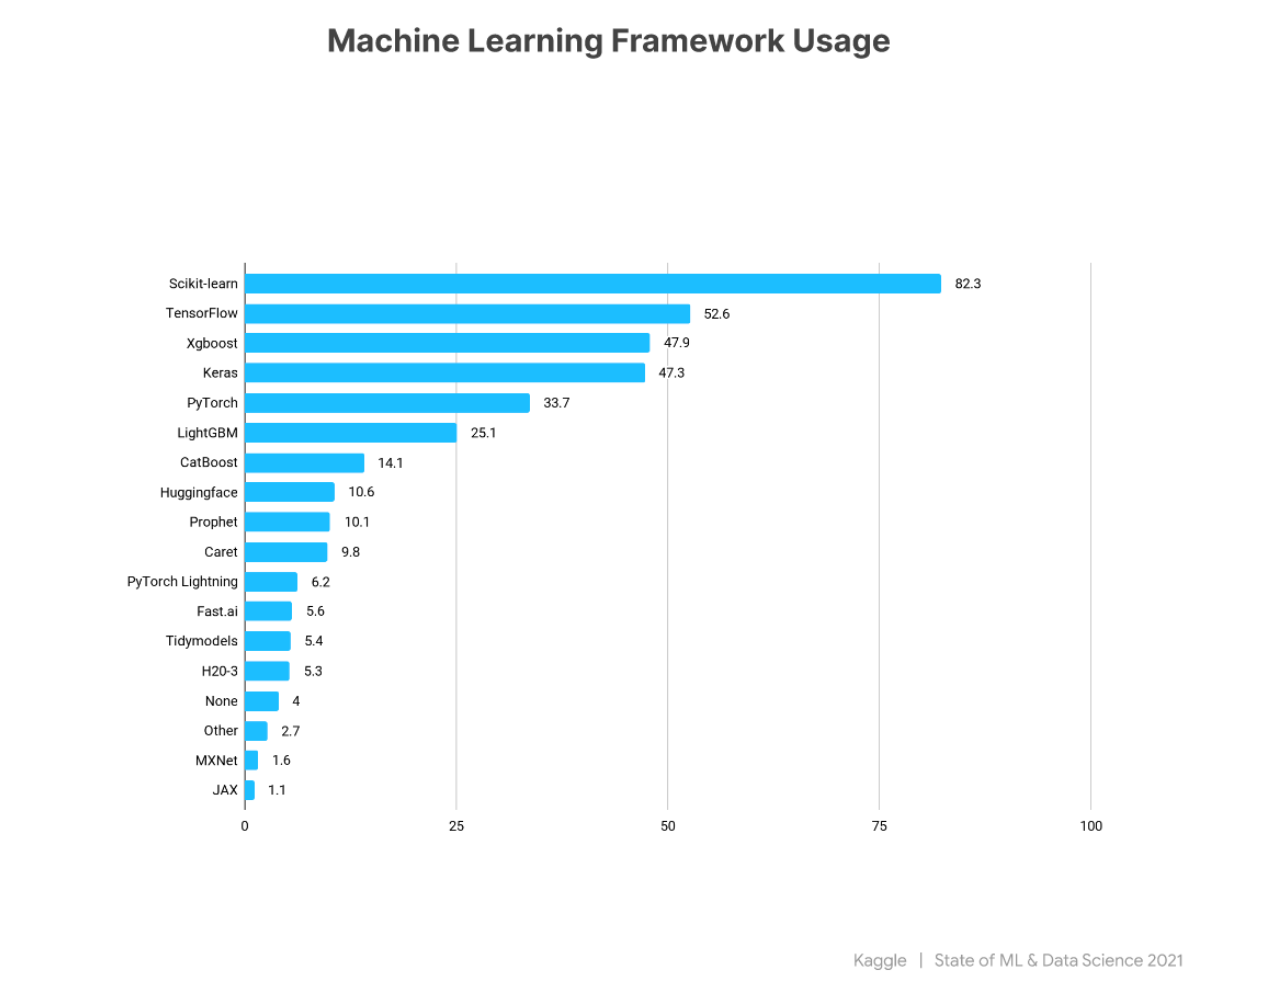 Machine learning framework popularity